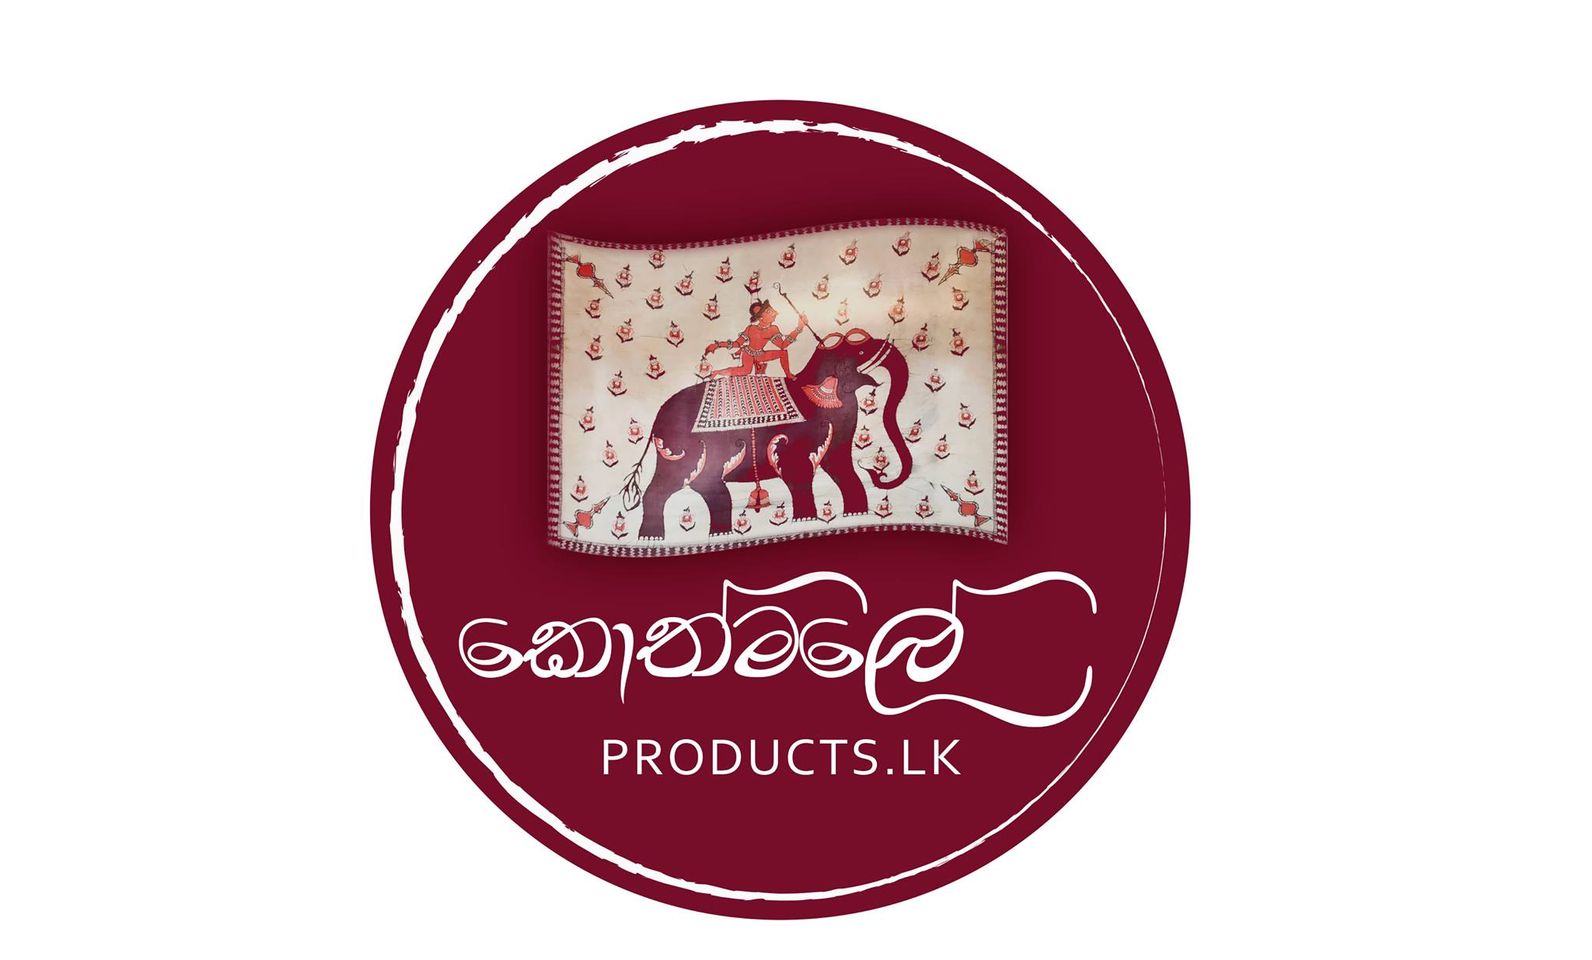 Launching kotmaleproducts.lk